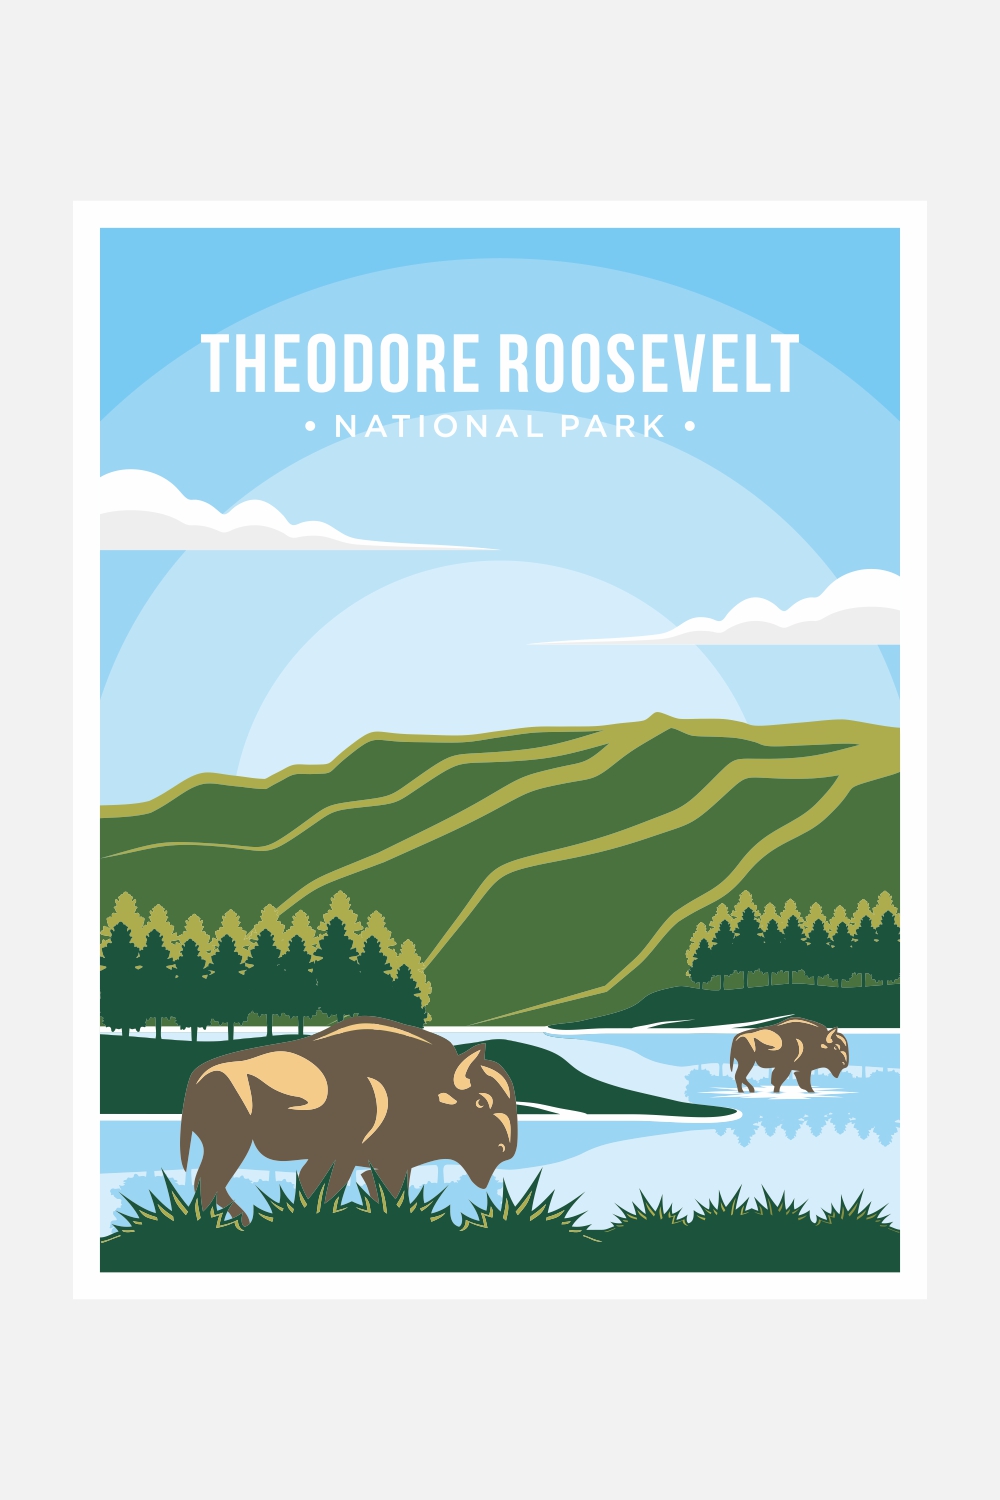 Theodore Roosevelt National Park poster vector illustration design – Only $8 pinterest preview image.